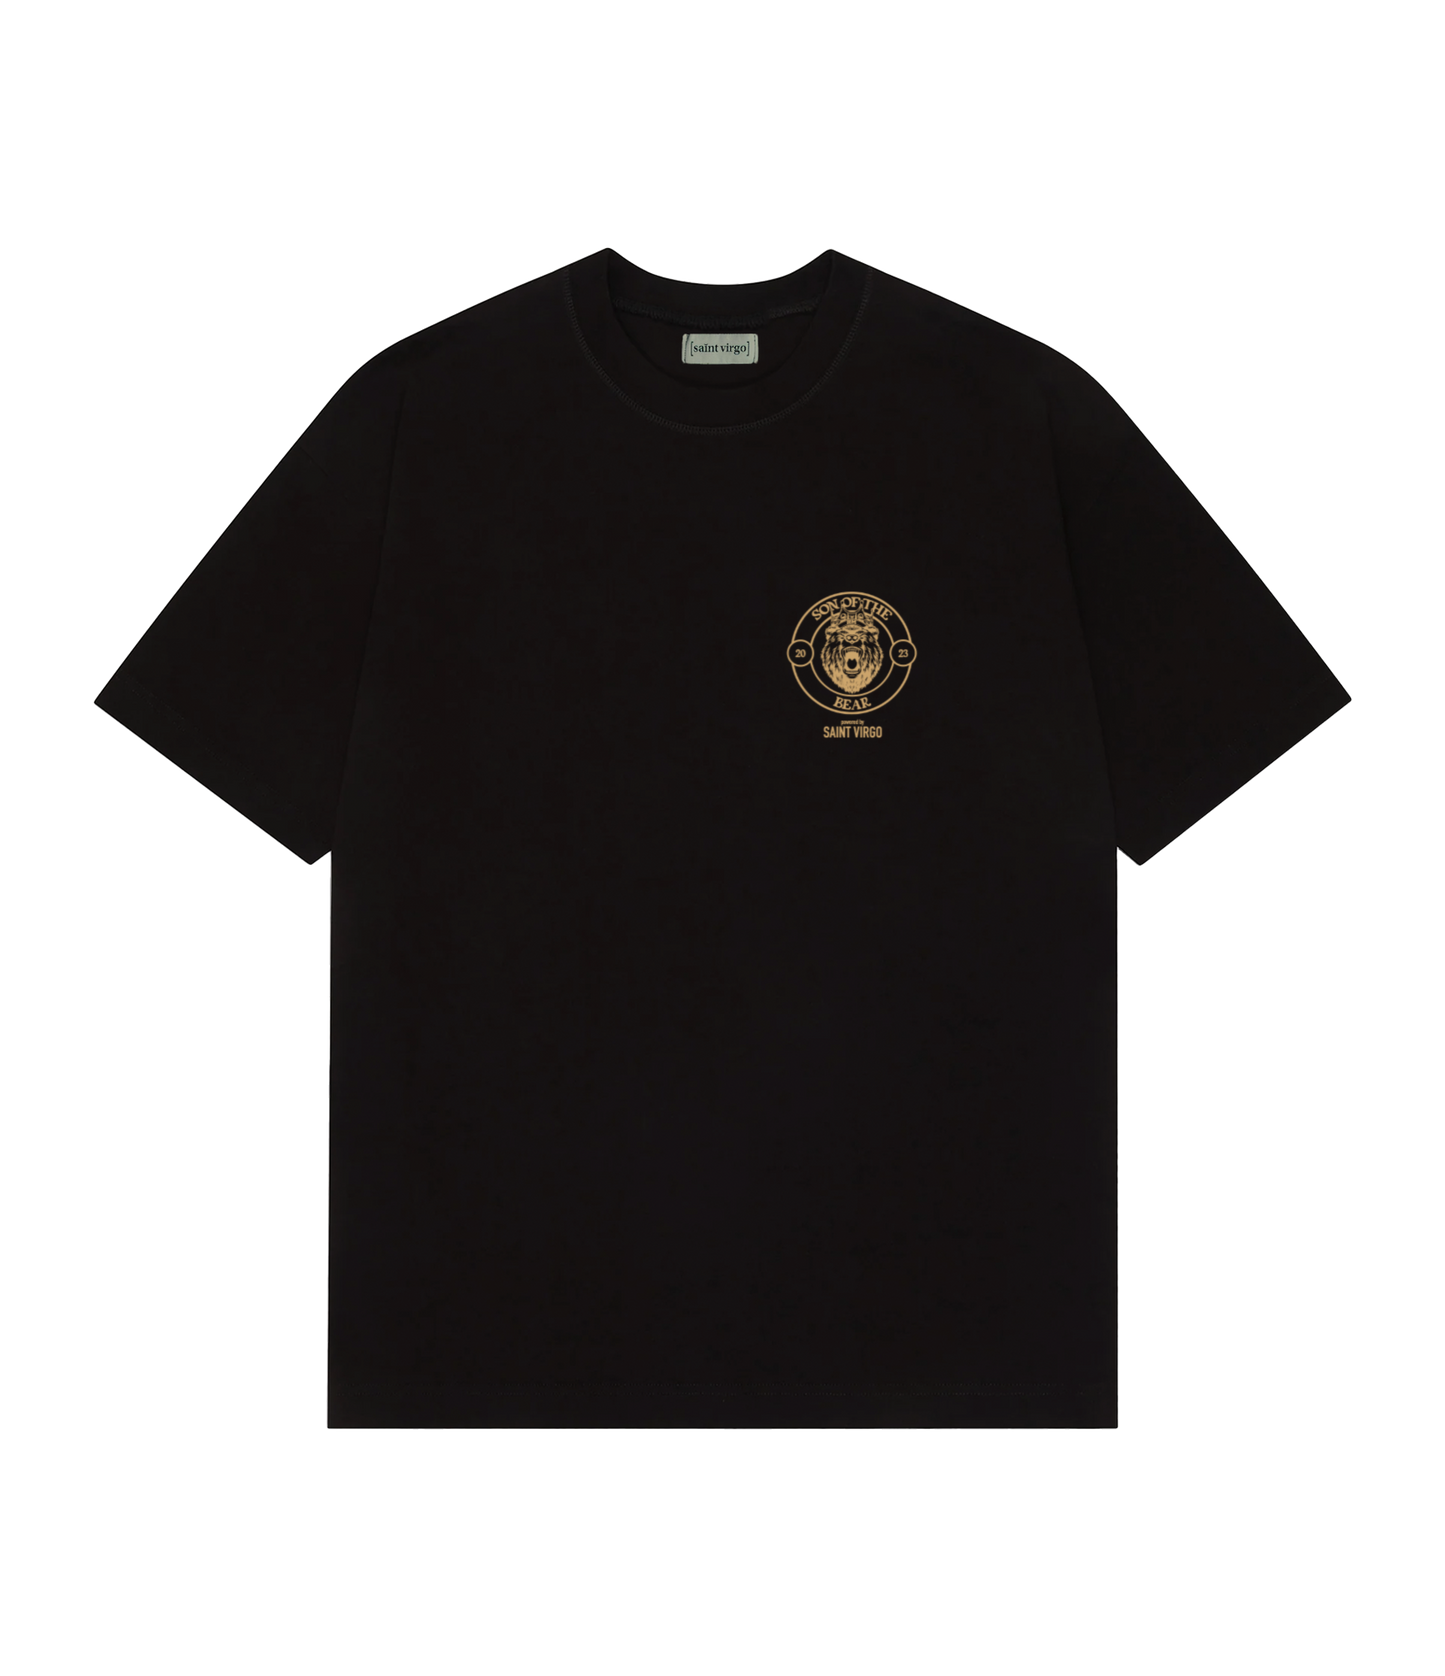 SON OF THE BEAR | Black T-Shirt